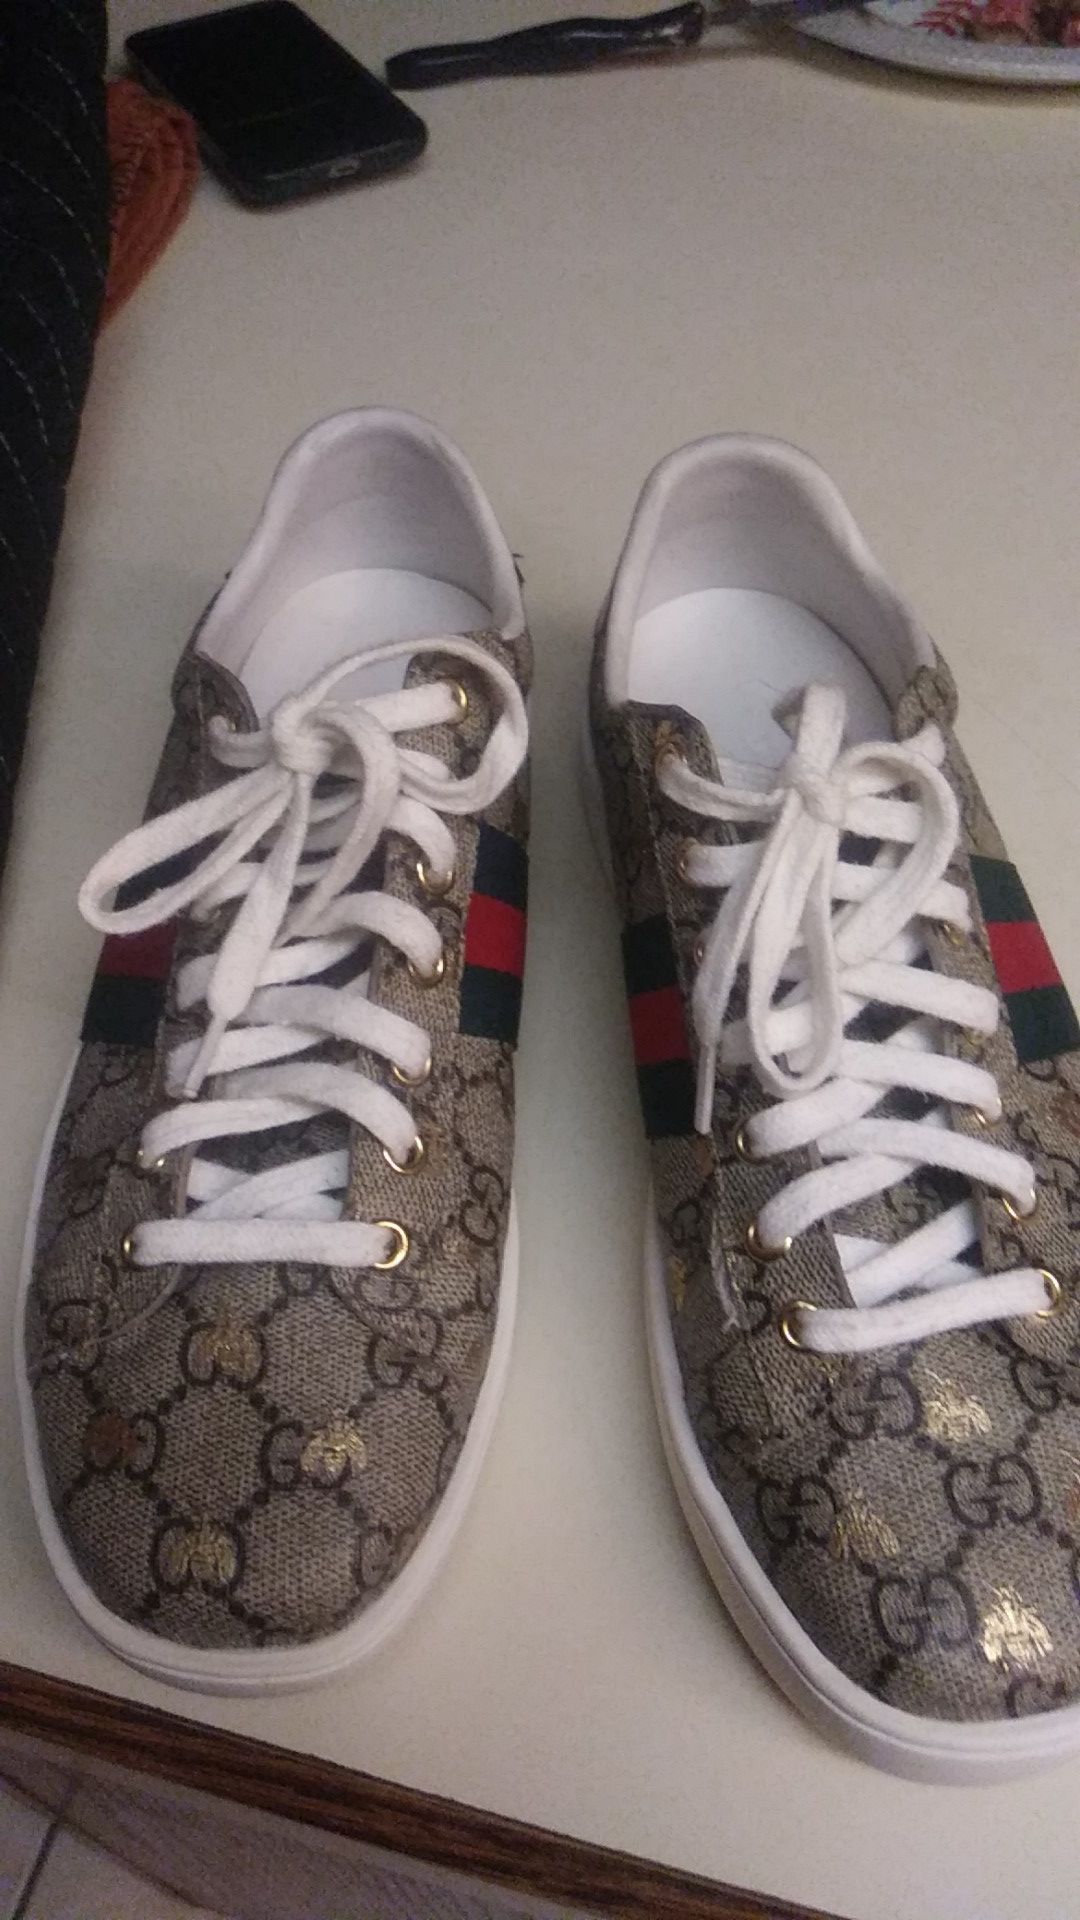 Gucci tennis shoes